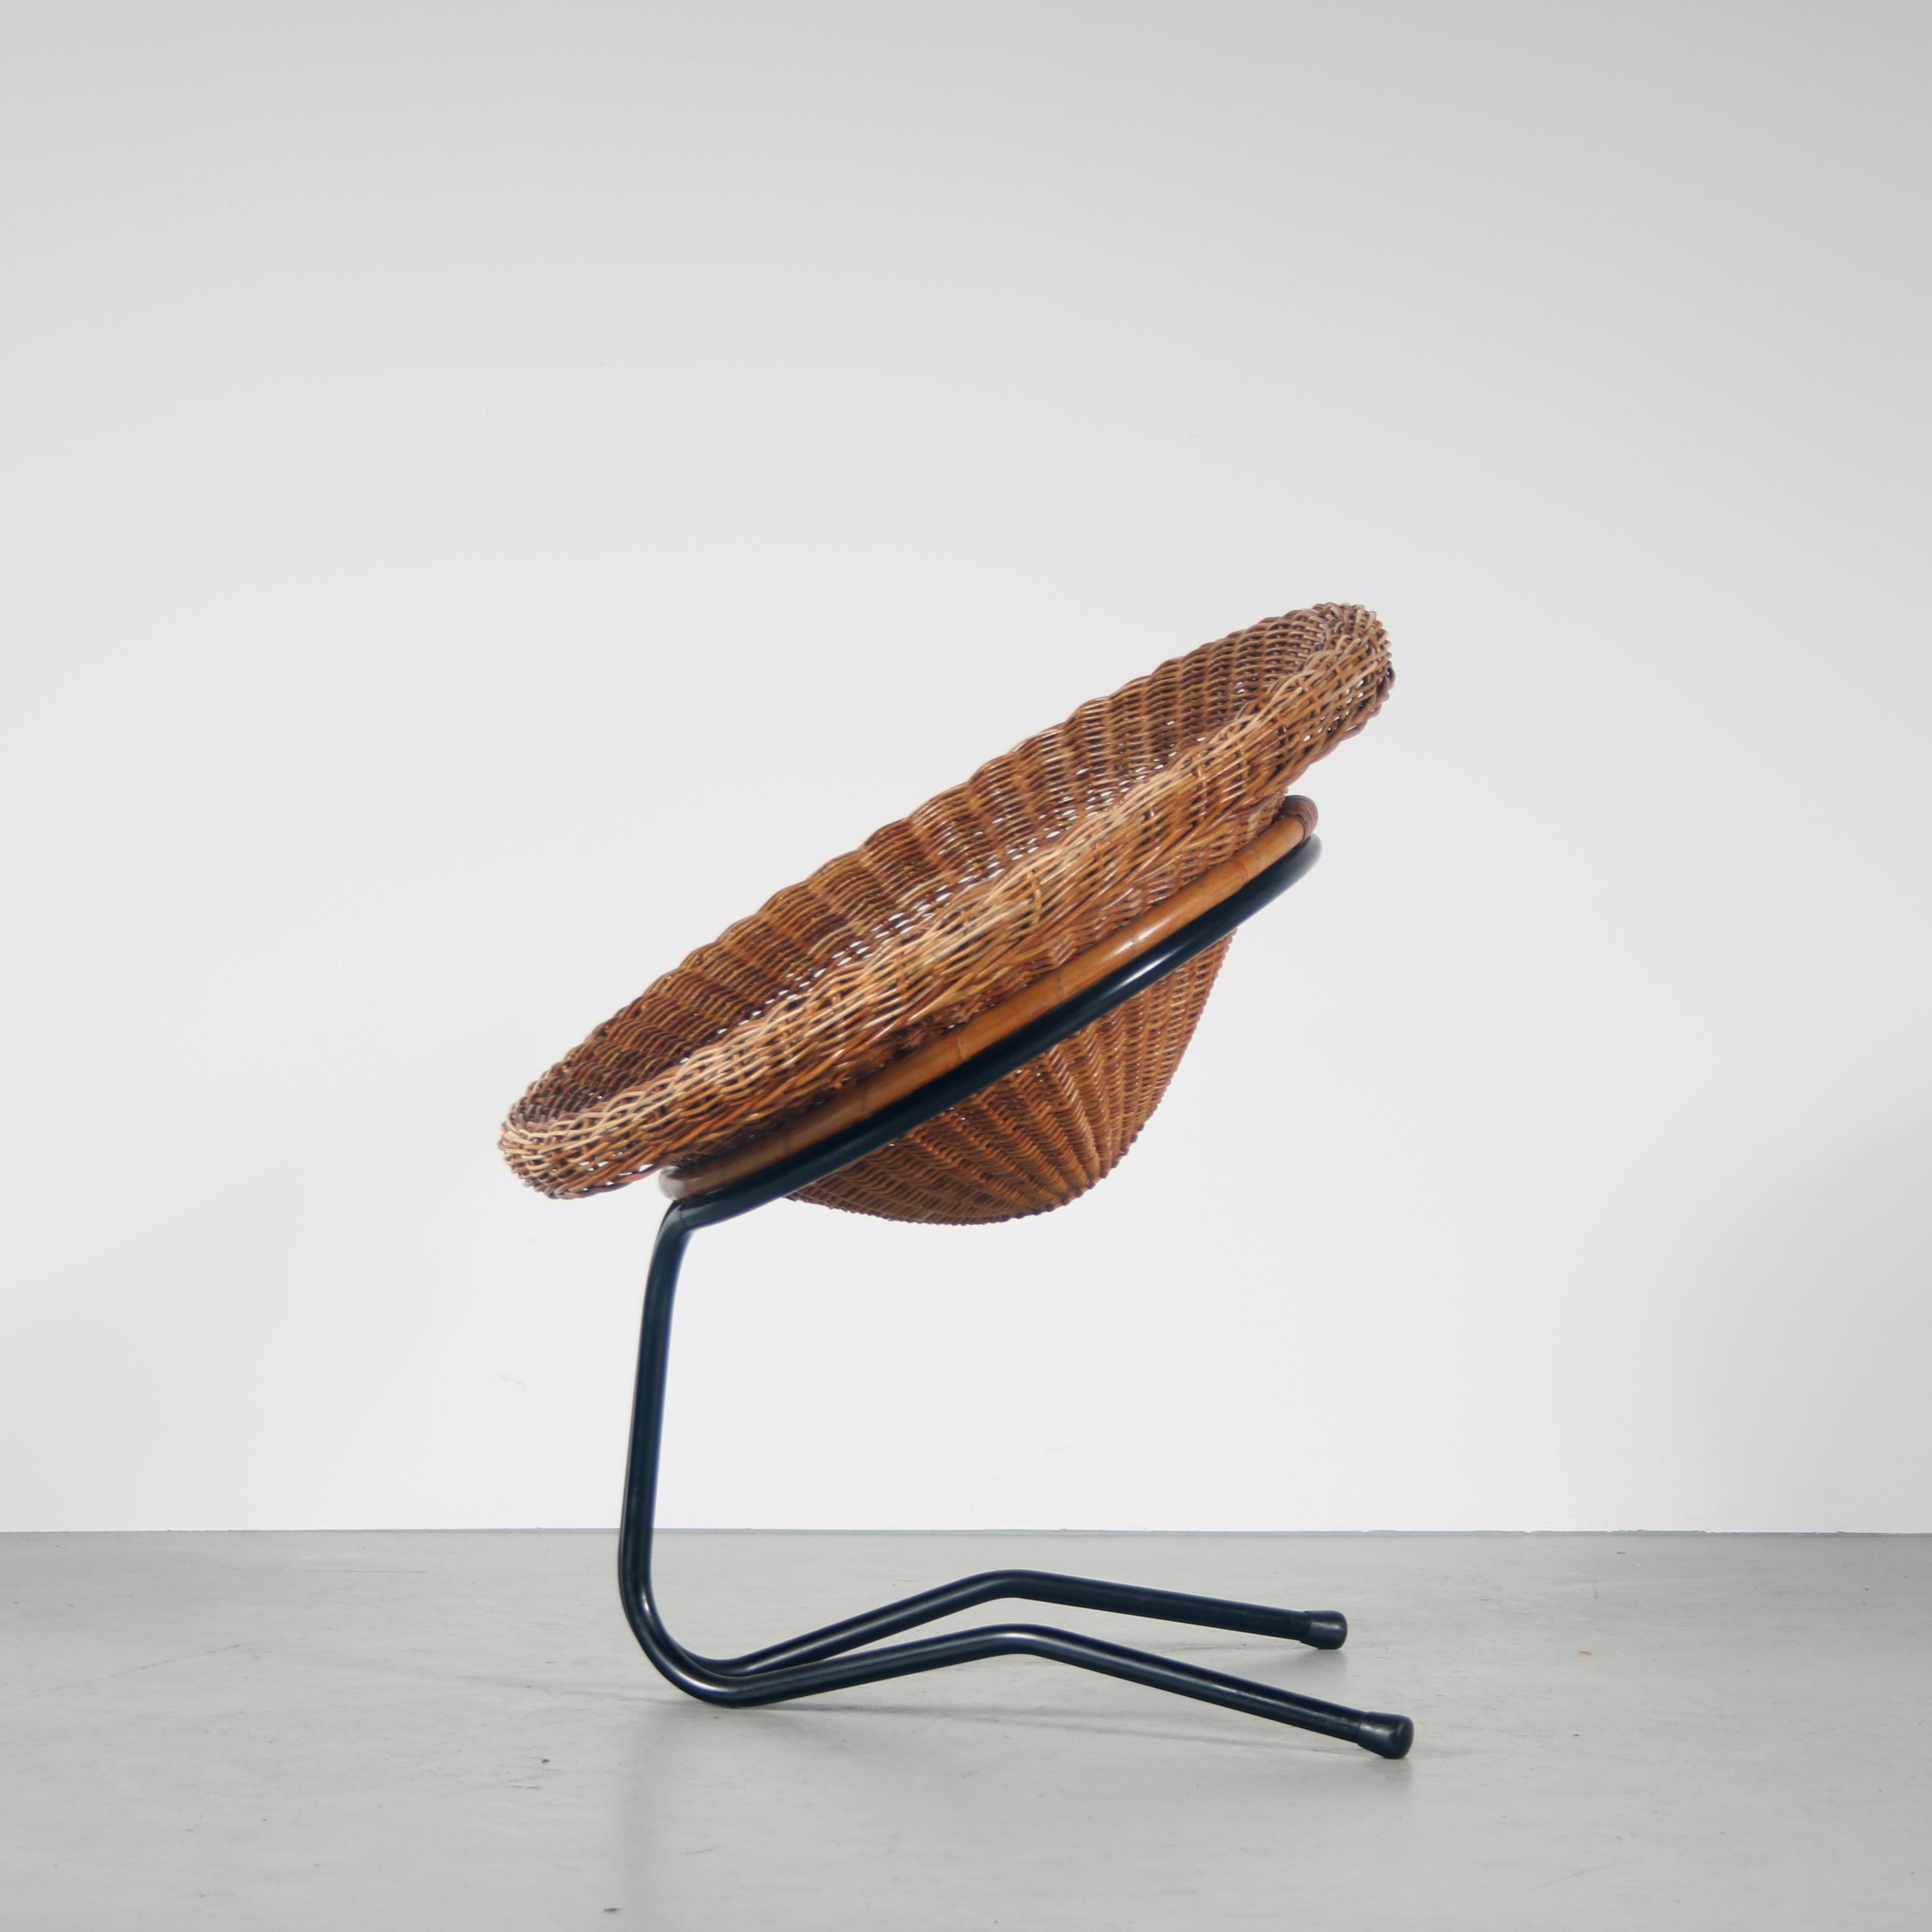 Dutch 1950s Wicker chair by A. Bueno de Mesquita for Rohé, Netherlands